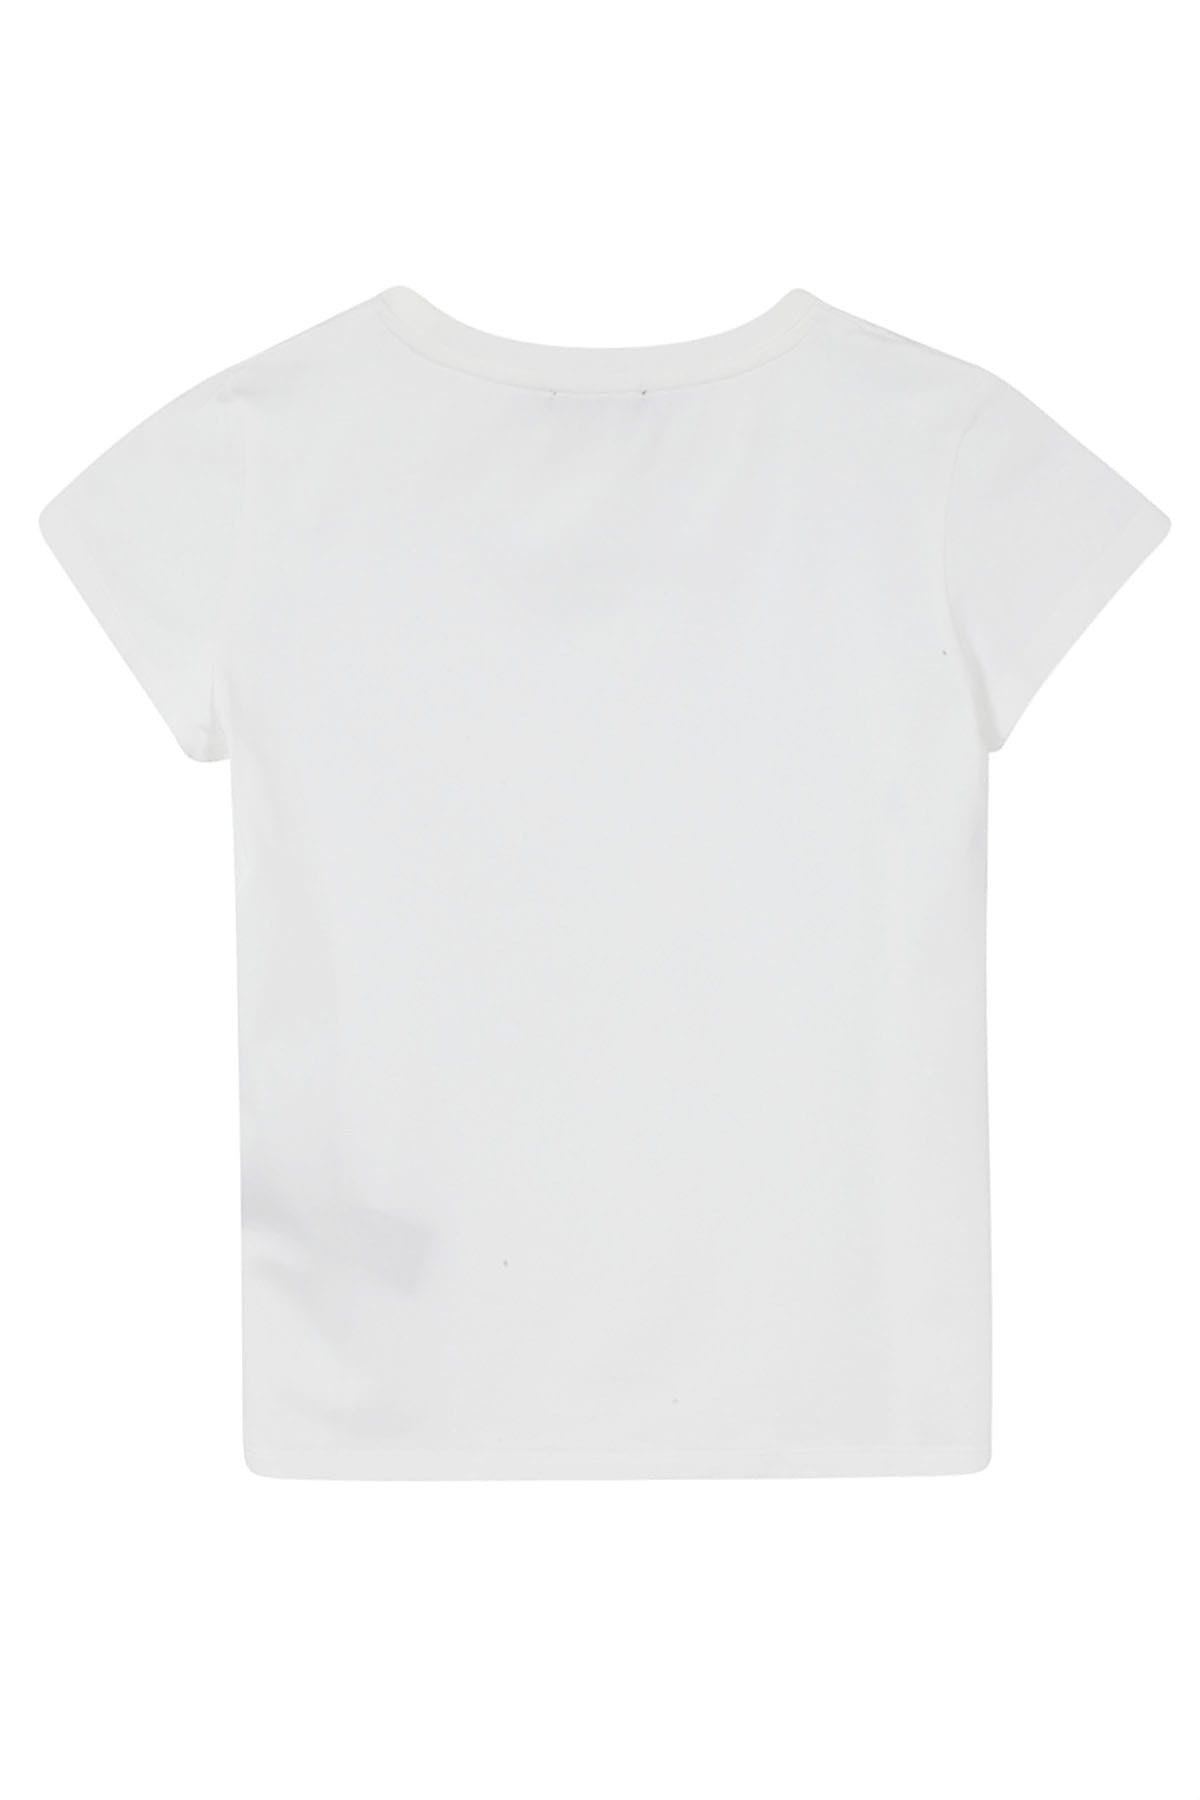 Shop Balmain T Shirt In White